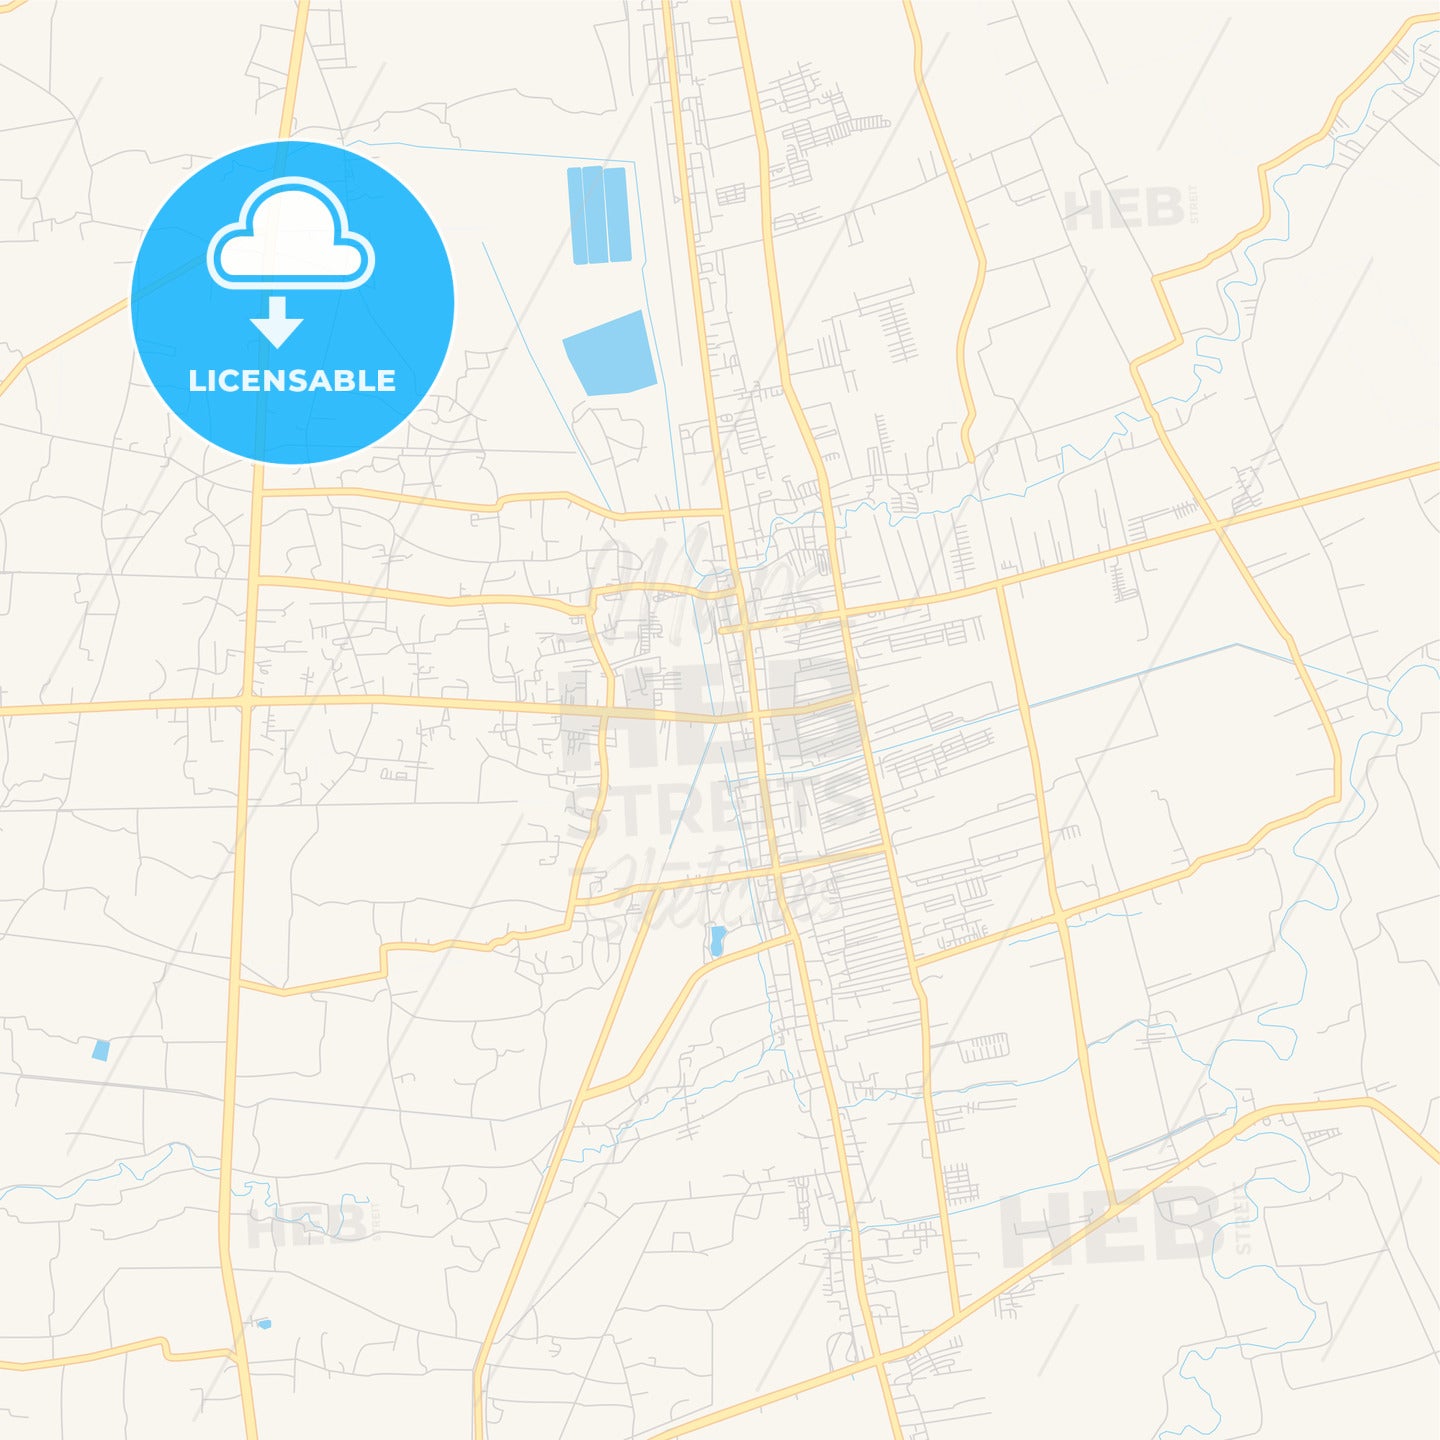 Printable street map of Nakhon Si Thammarat, Thailand